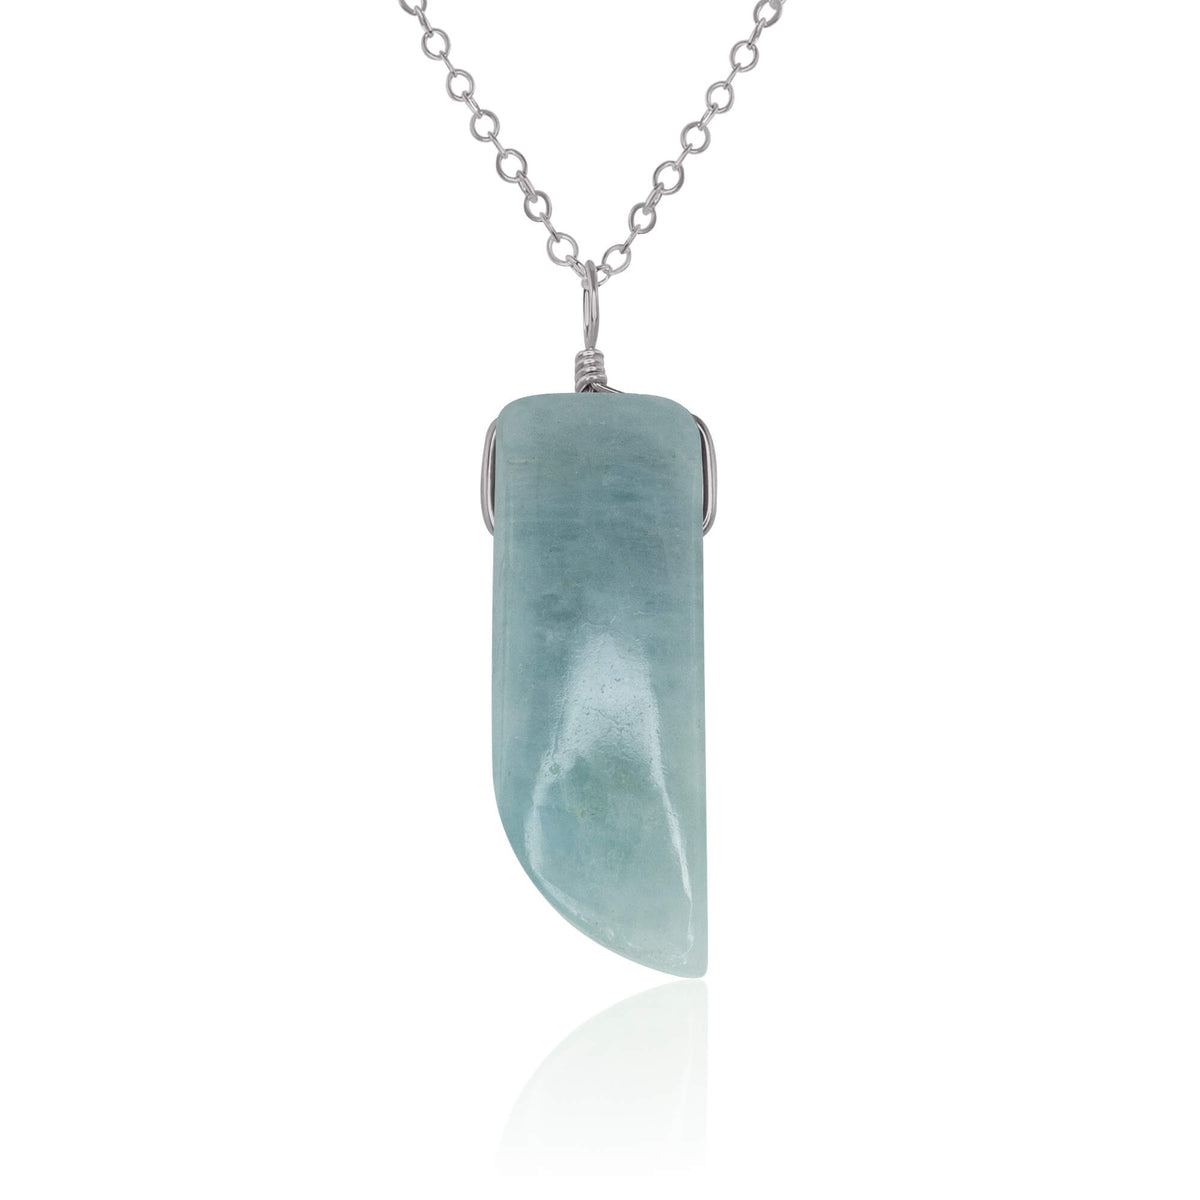 Smooth Point Pendant Necklace - Aquamarine - Stainless Steel - Luna Tide Handmade Jewellery